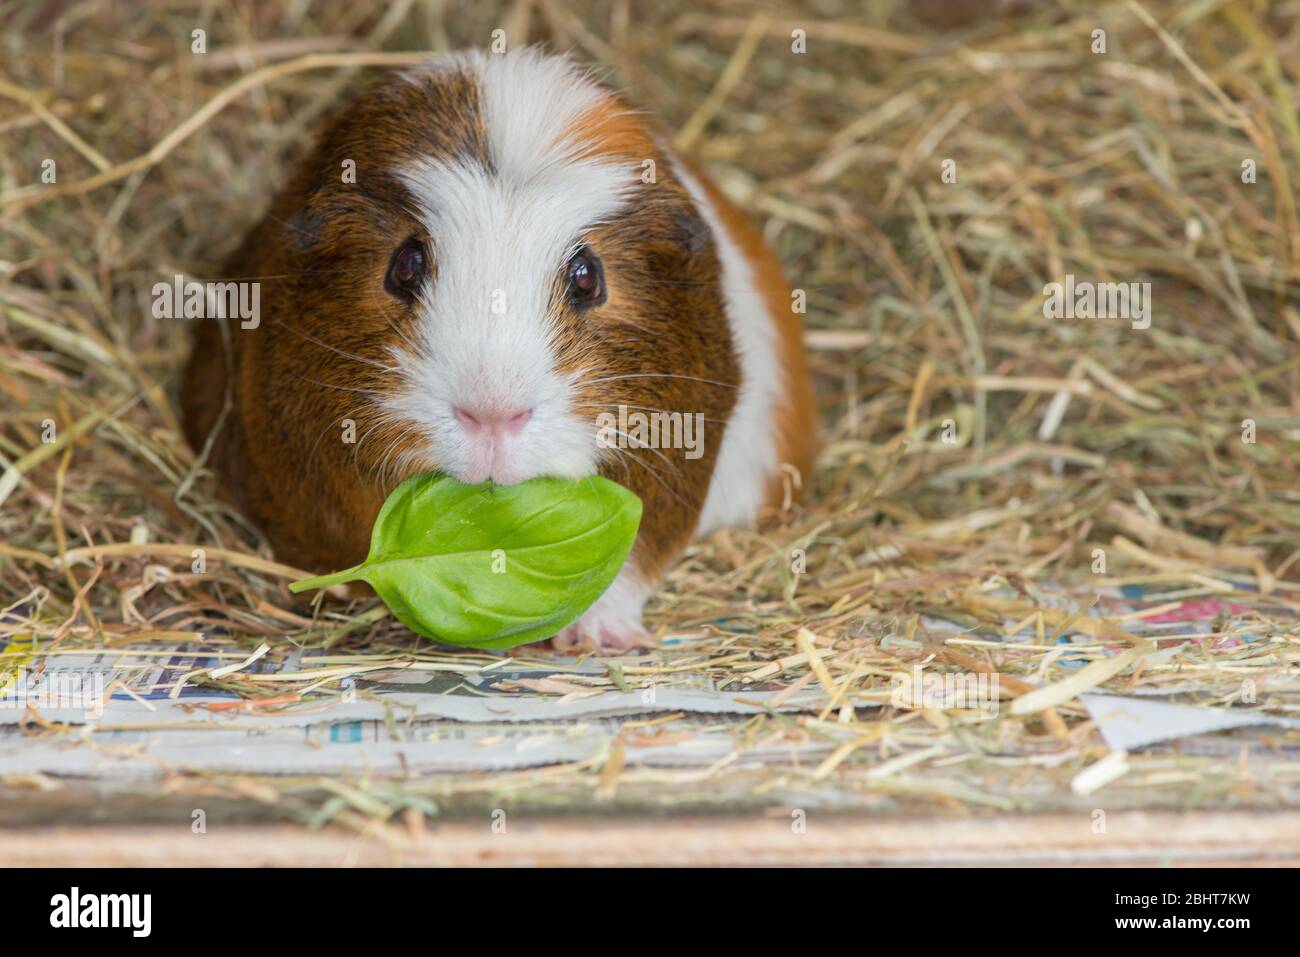 Adult boar Guinea Pig in hutch eating basil leaf. Stock Photo